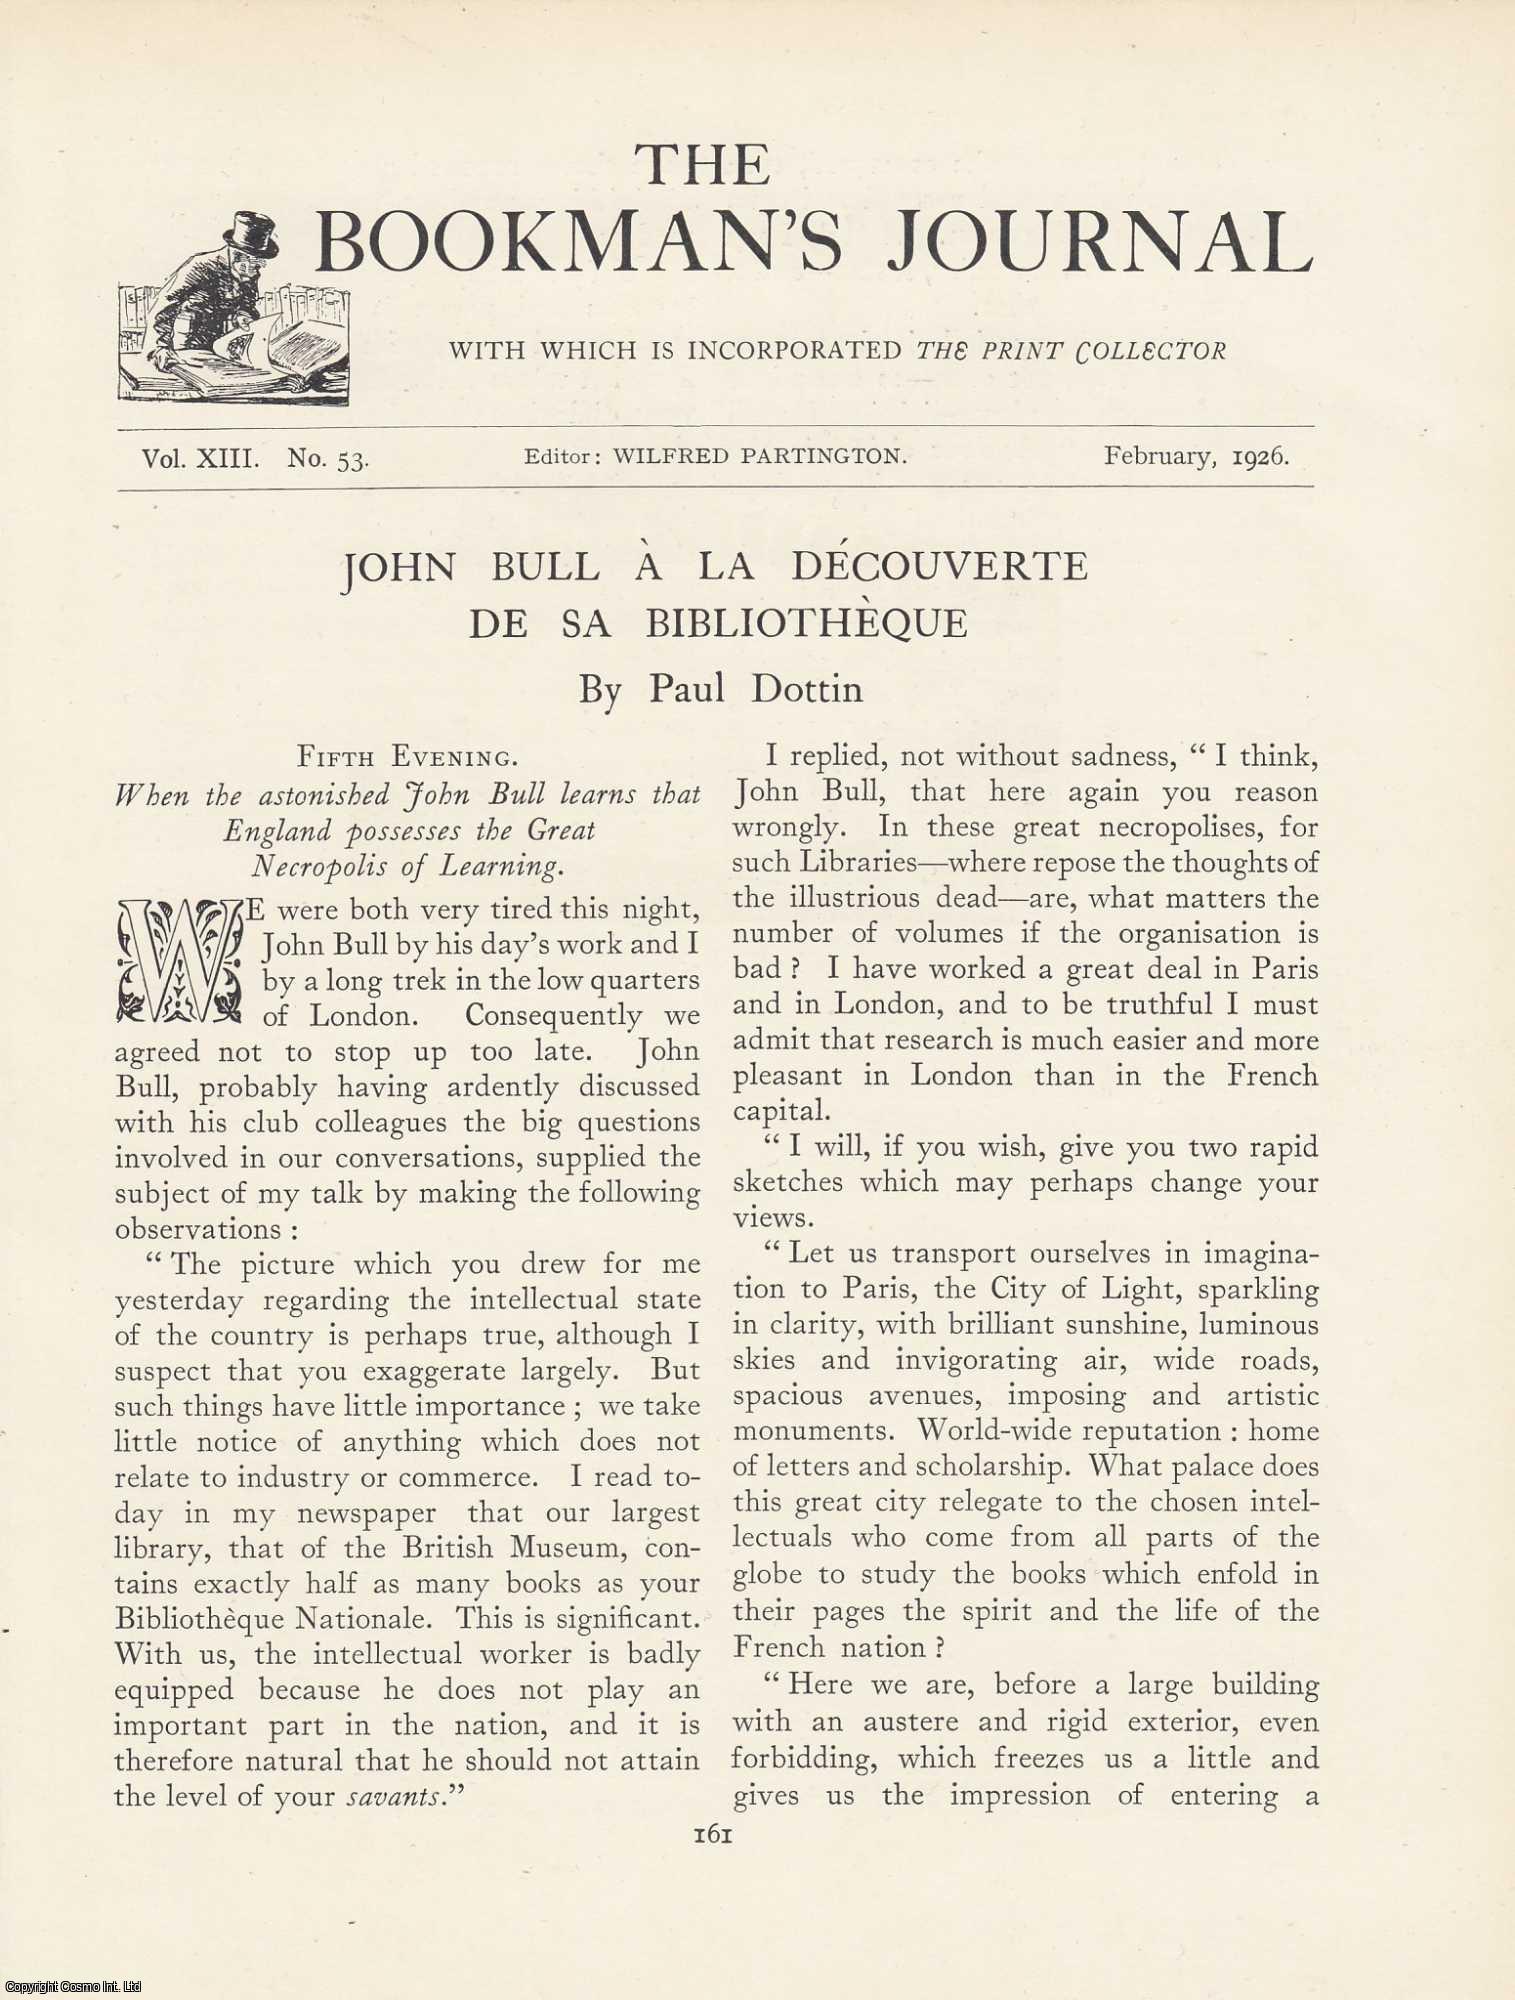 Paul Dottin - John Bull a la decouverte de sa bibliotheque. An original article from The Bookman's Journal.